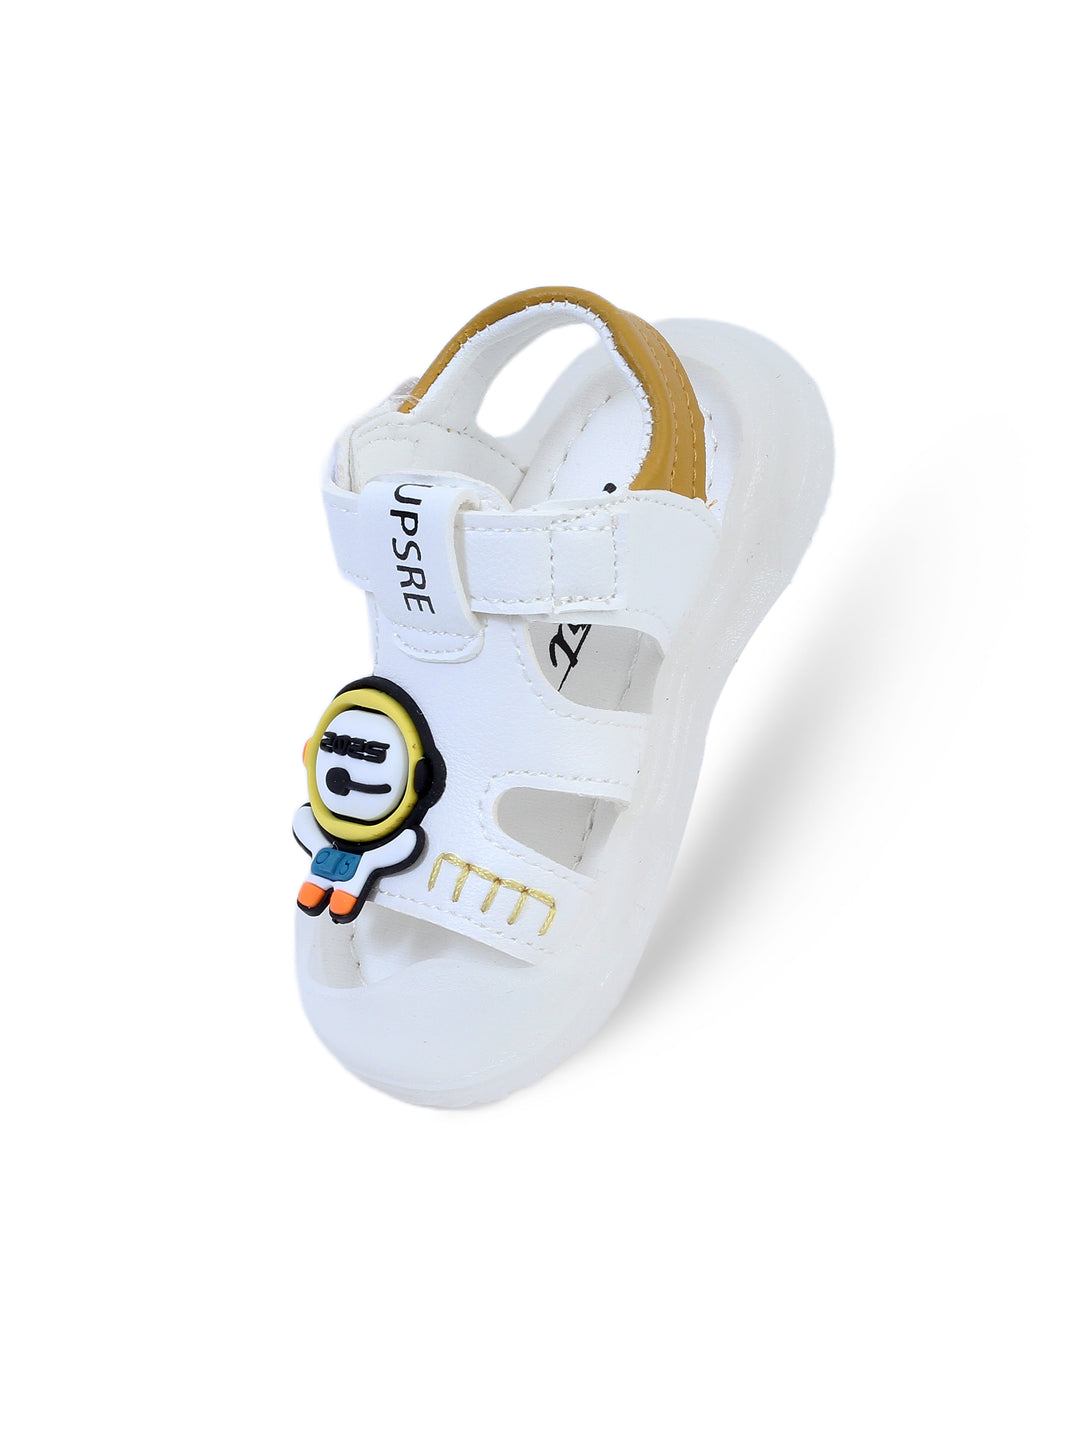 Imp Baby Sandal #A-809 (S-23)